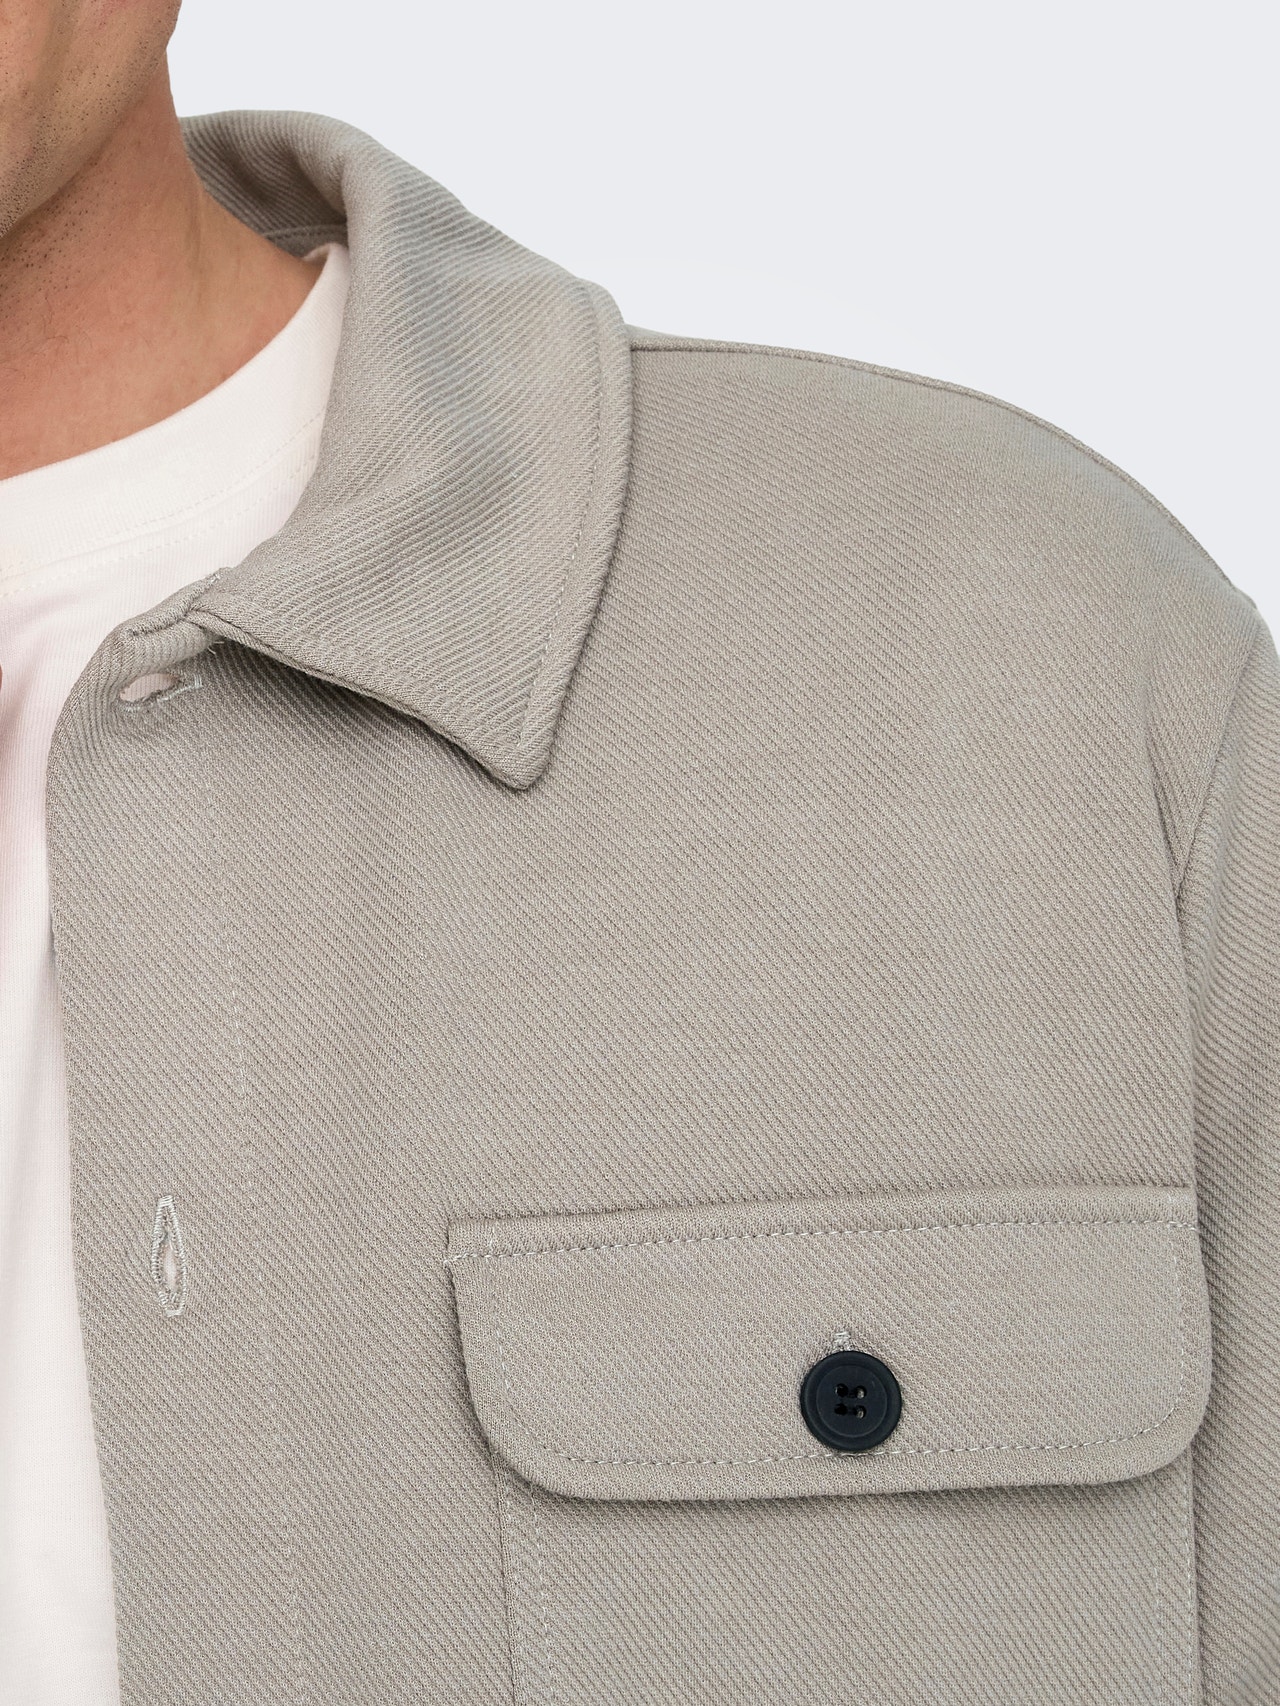 ONLY & SONS Regular Fit Shirt collar Shirt -Vintage Khaki - 22021279